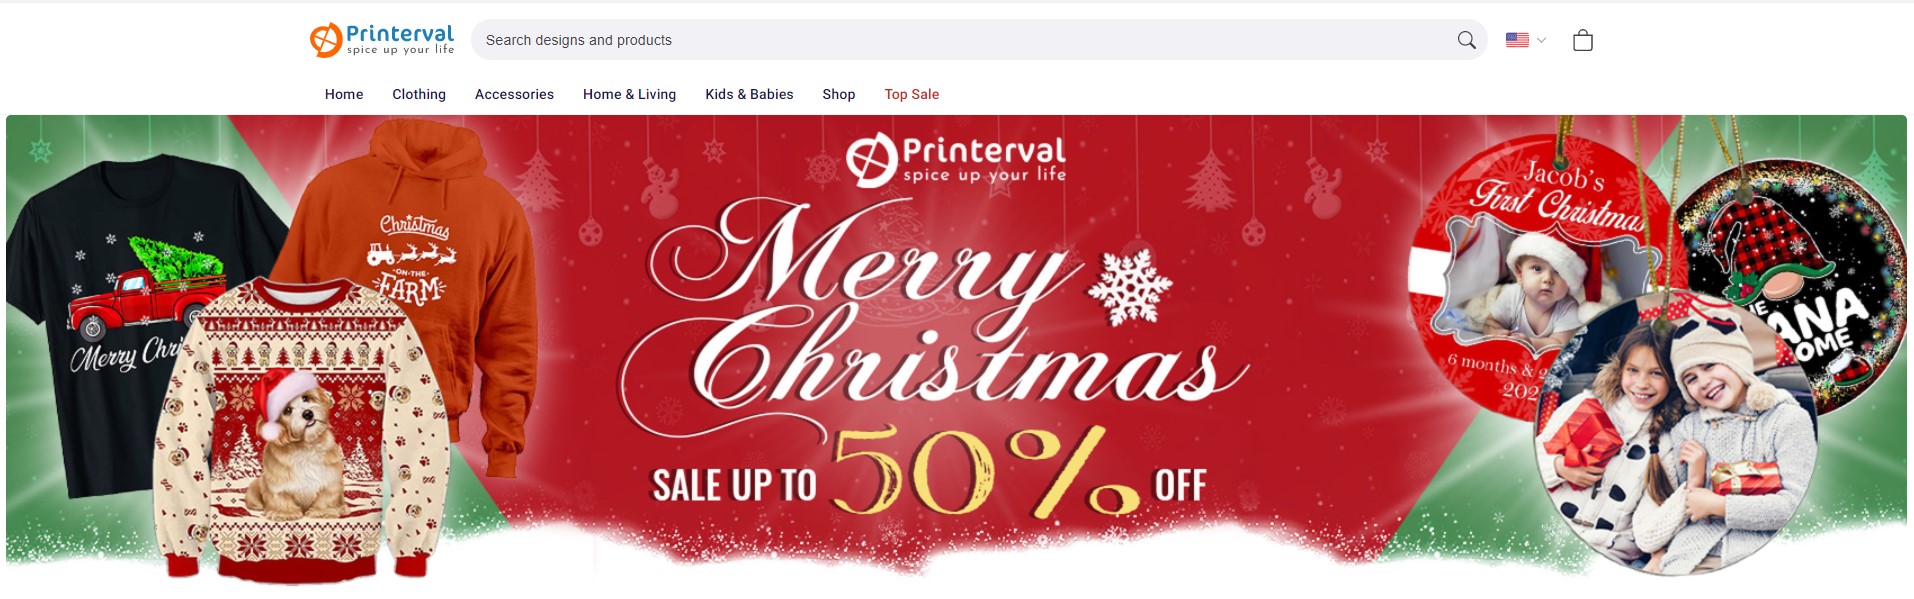 Printerval Homepage